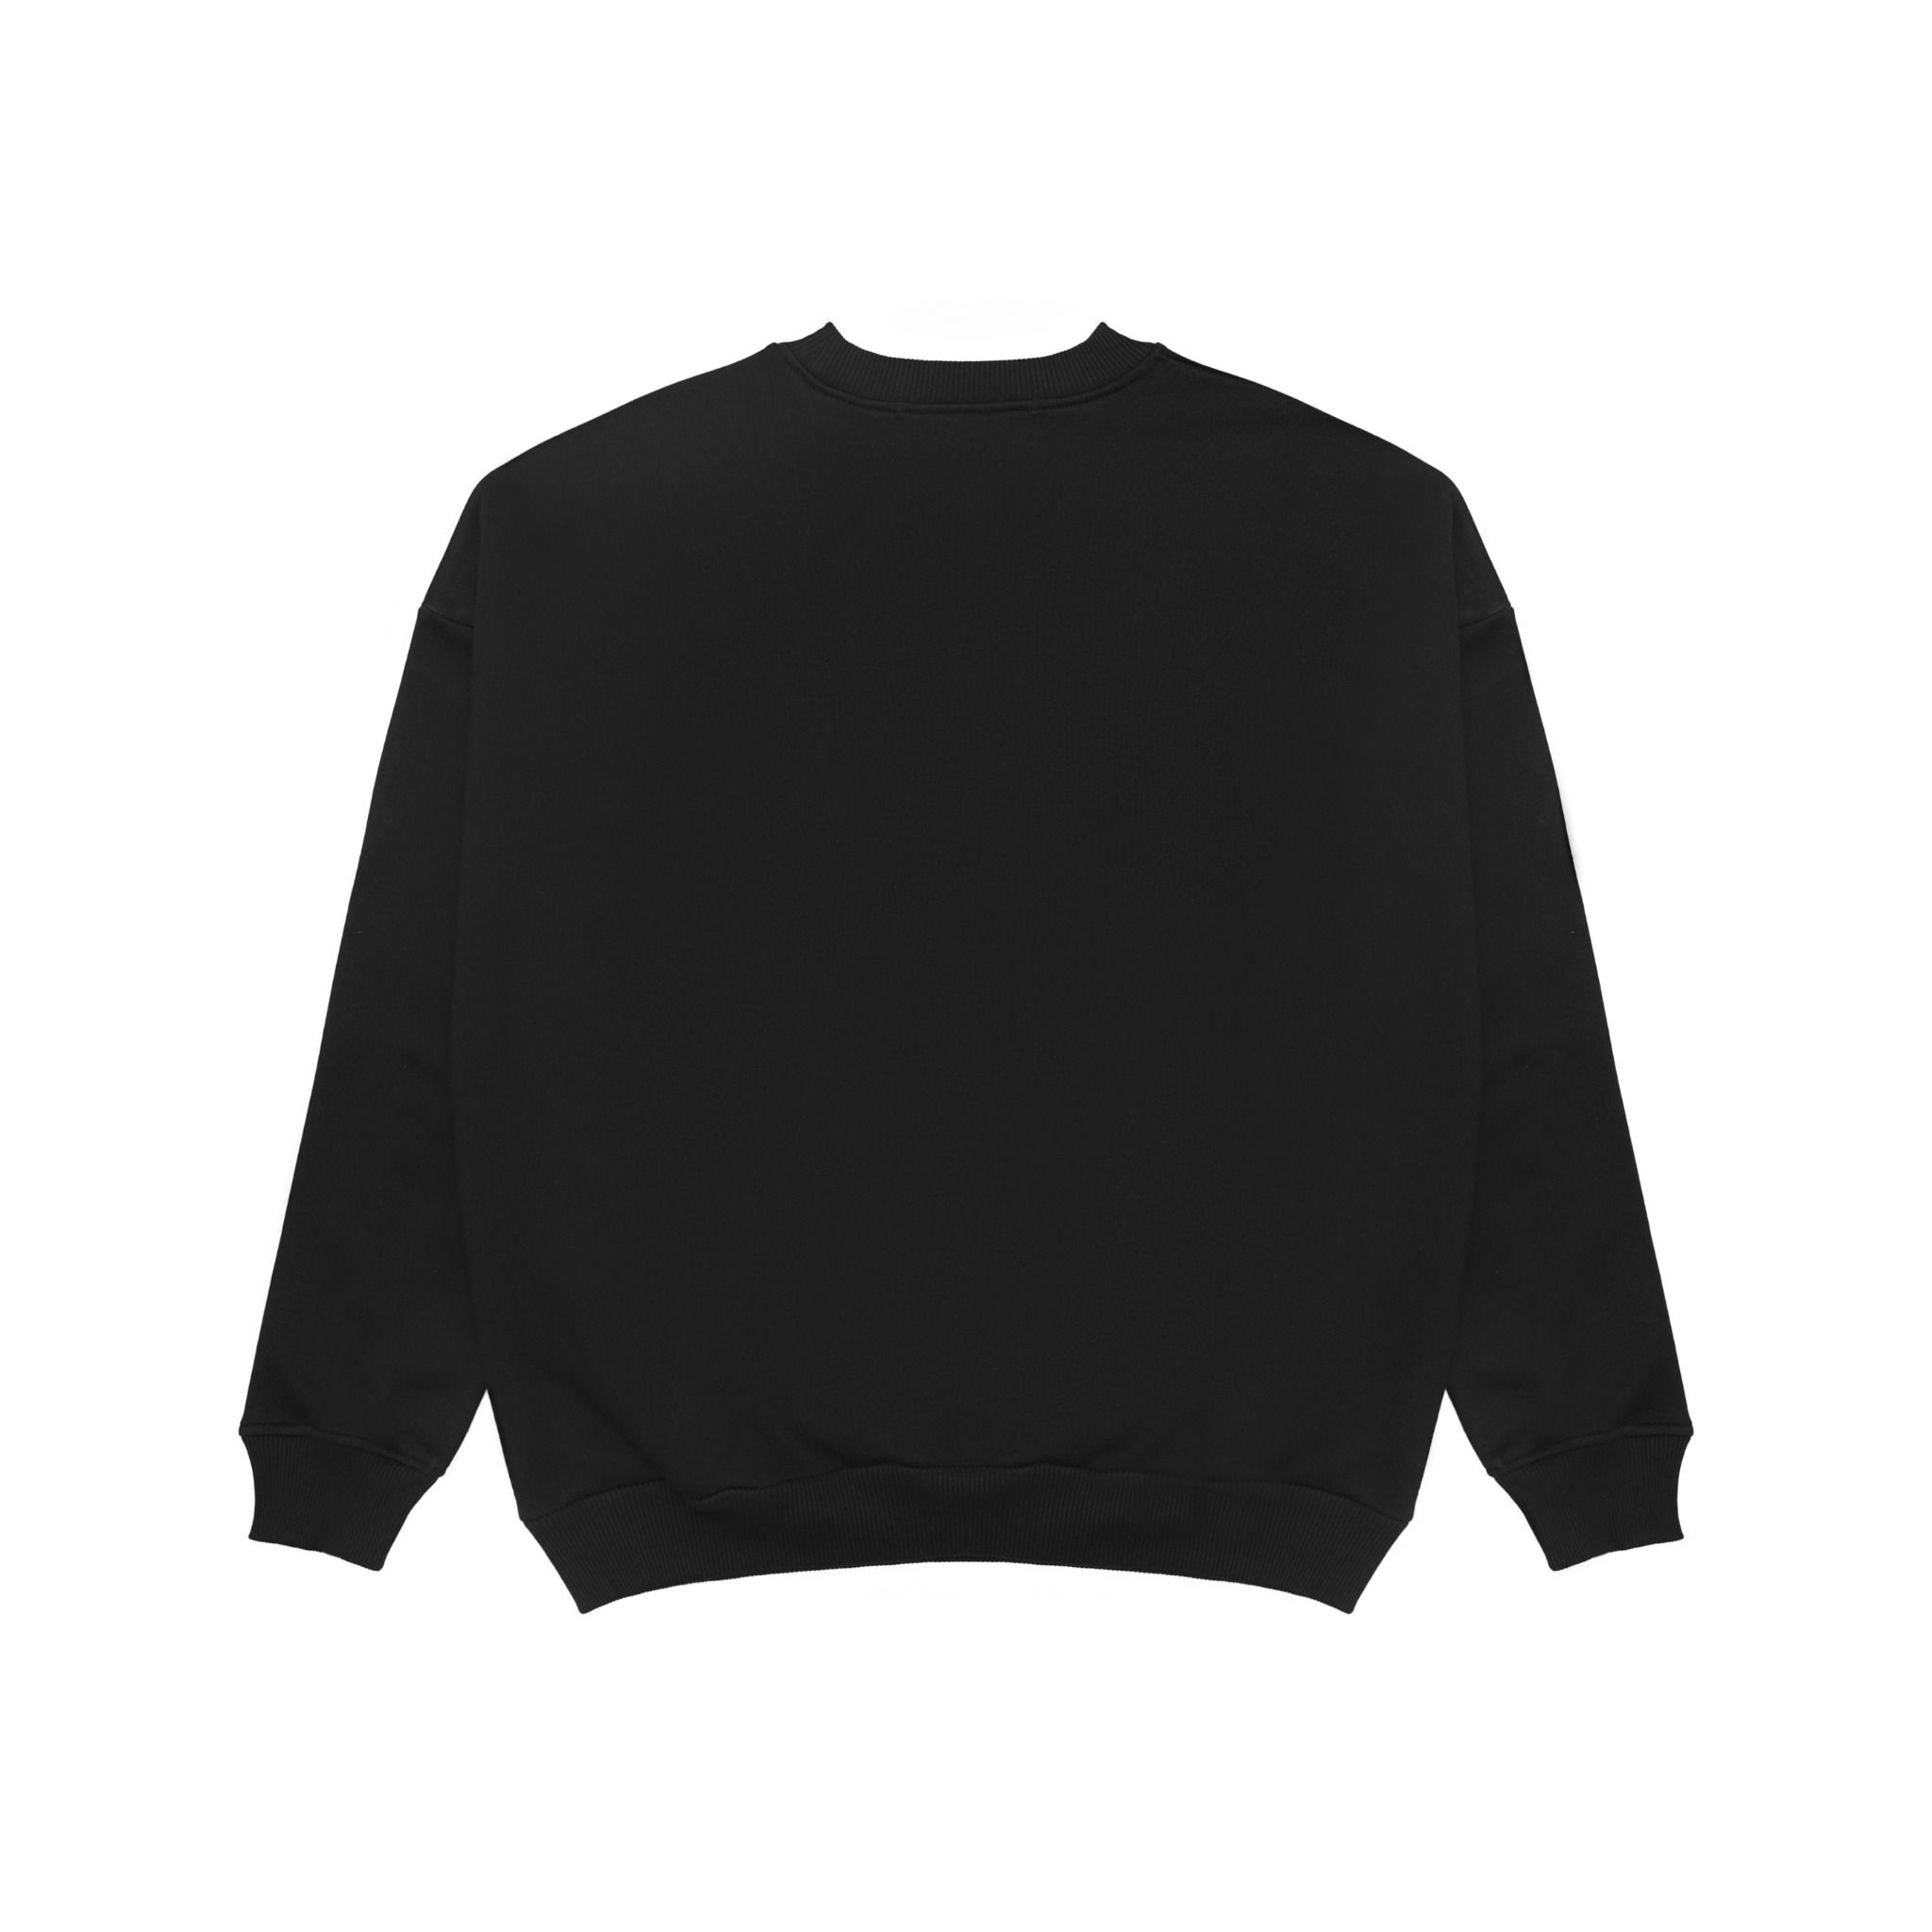  Áo Sweater Boxy Màu Đen | NAGO SWEATER 